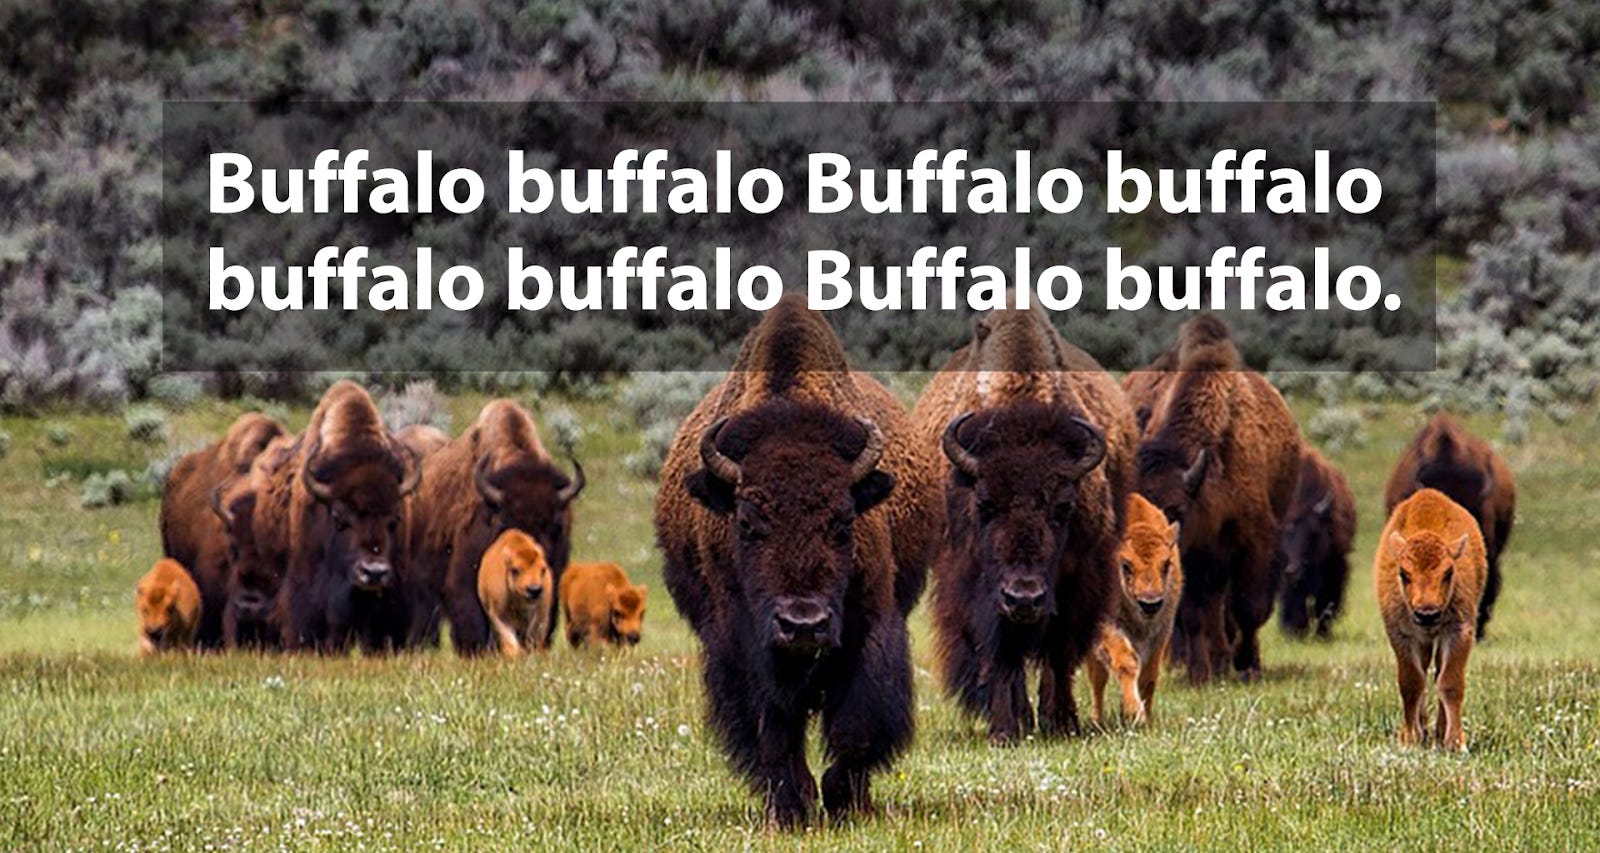 Buffalo buffalo Buffalo buffalo buffalo buffalo Buffalo buffalo